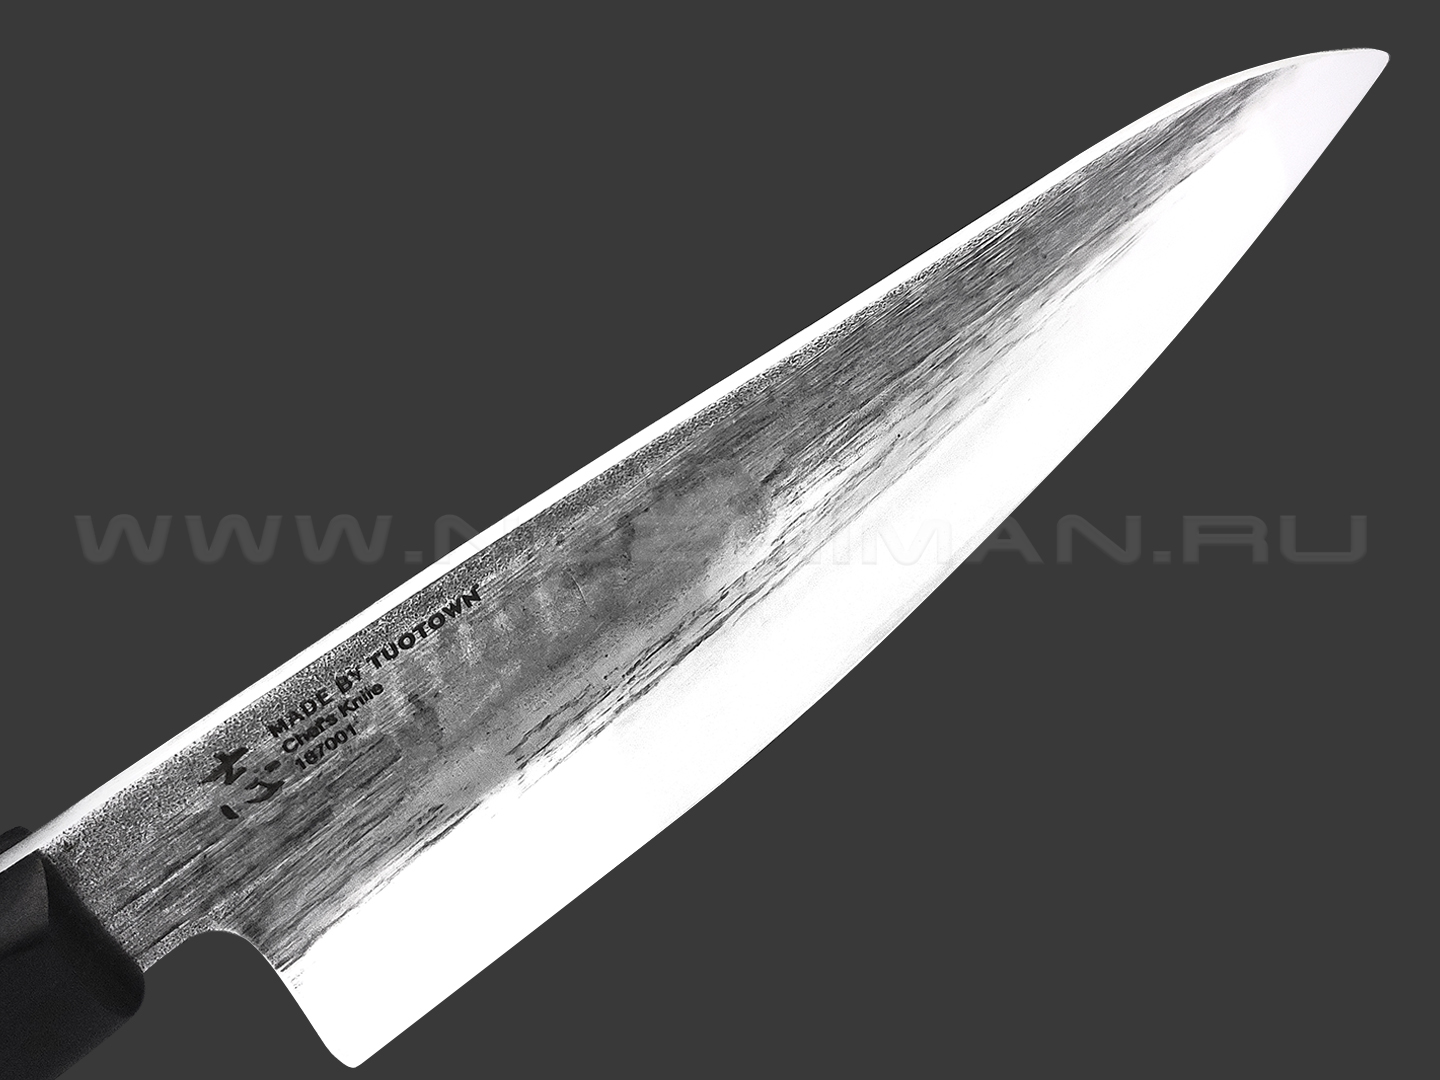 TuoTown кованый нож Chefs 18 см 187001 сталь Aus-10, рукоять Сандаловое дерево